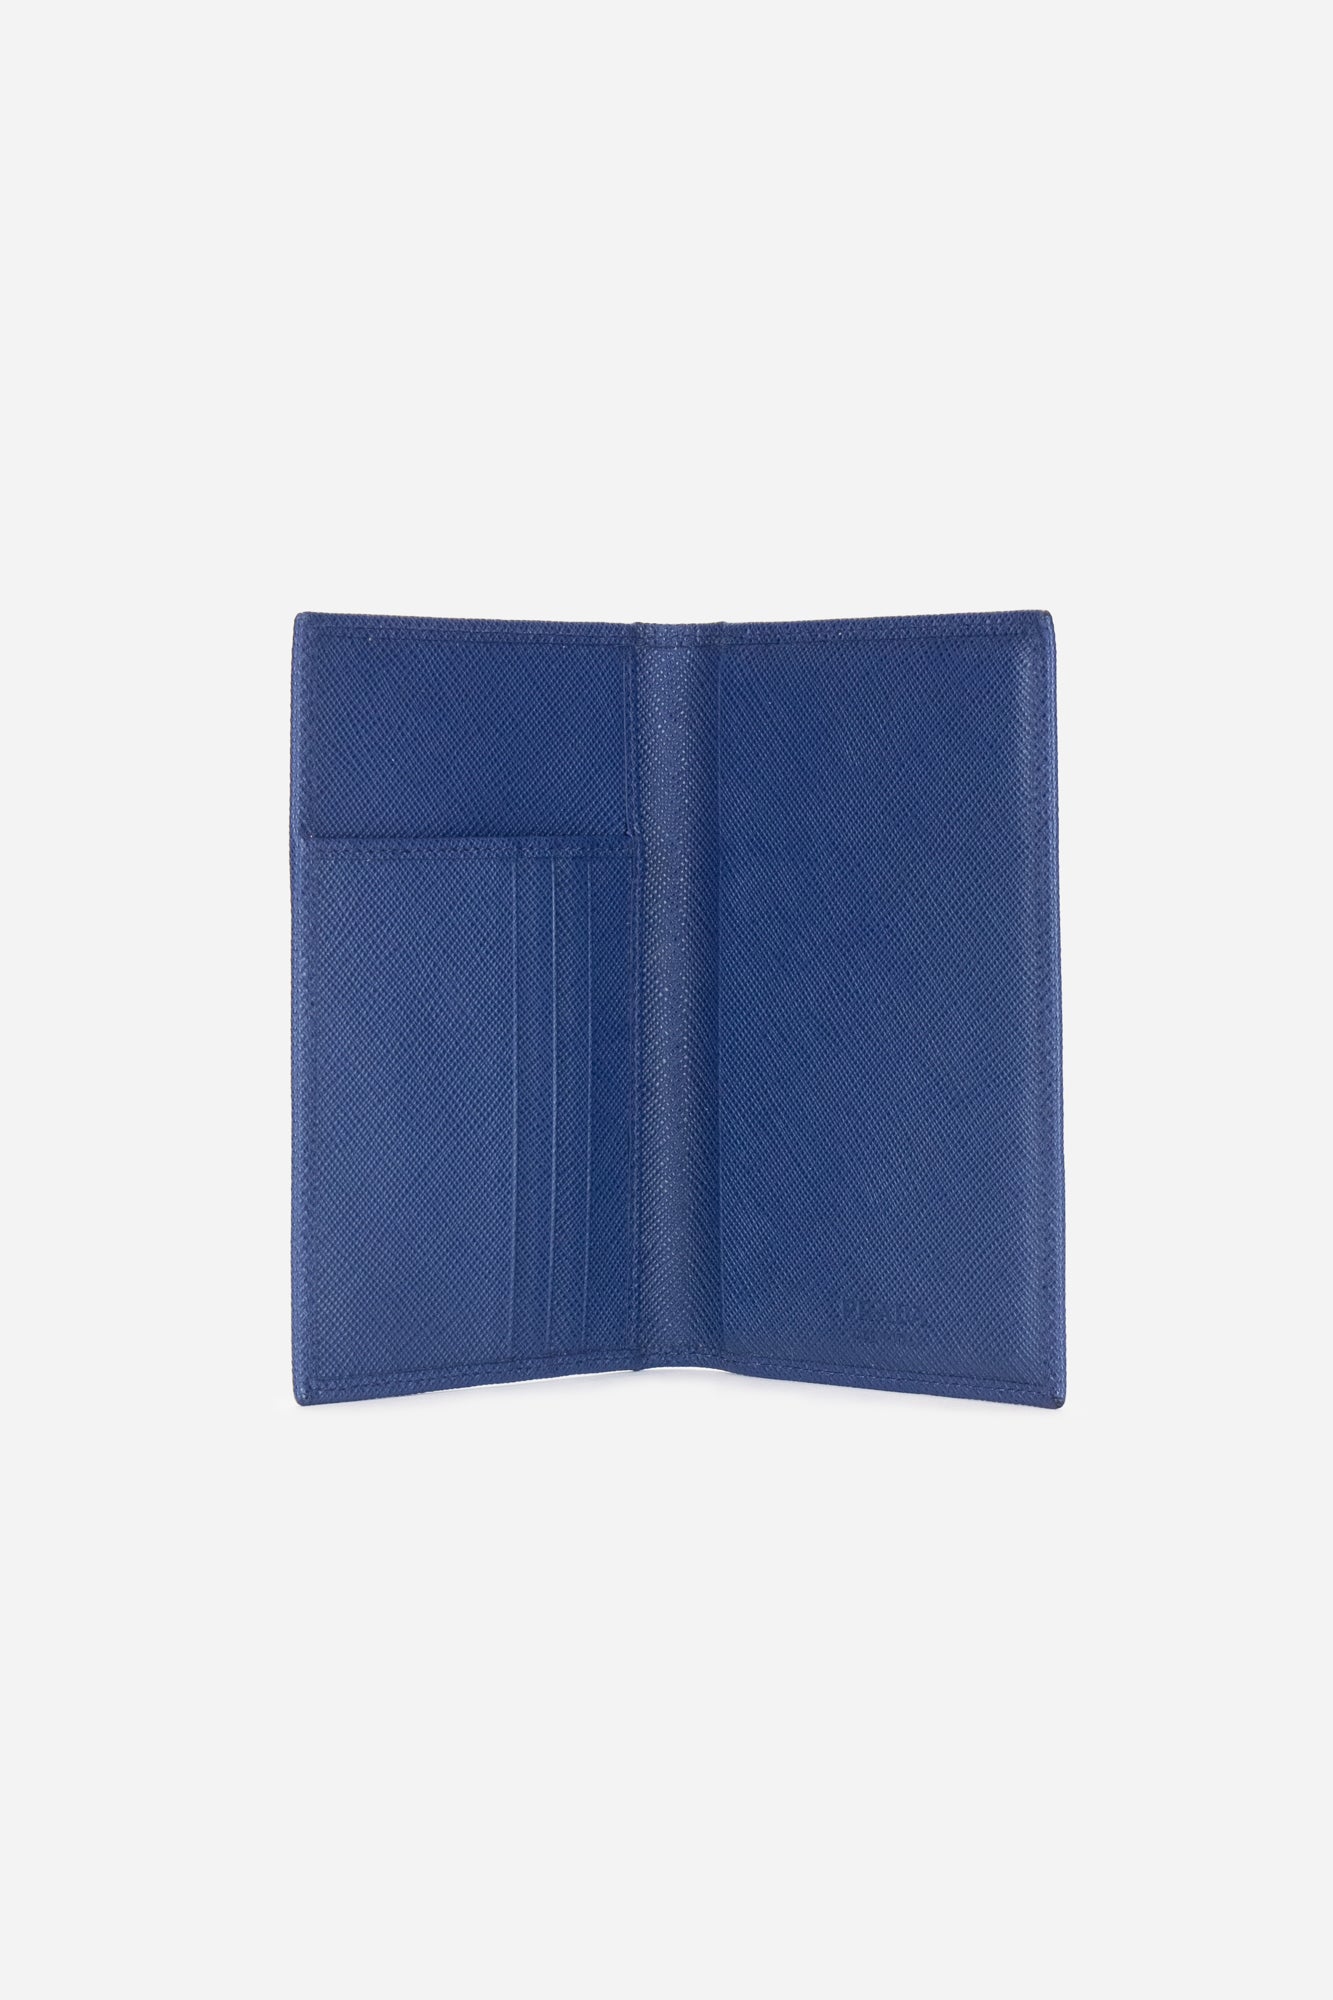 Blue Saffiano Leather Passport Holder